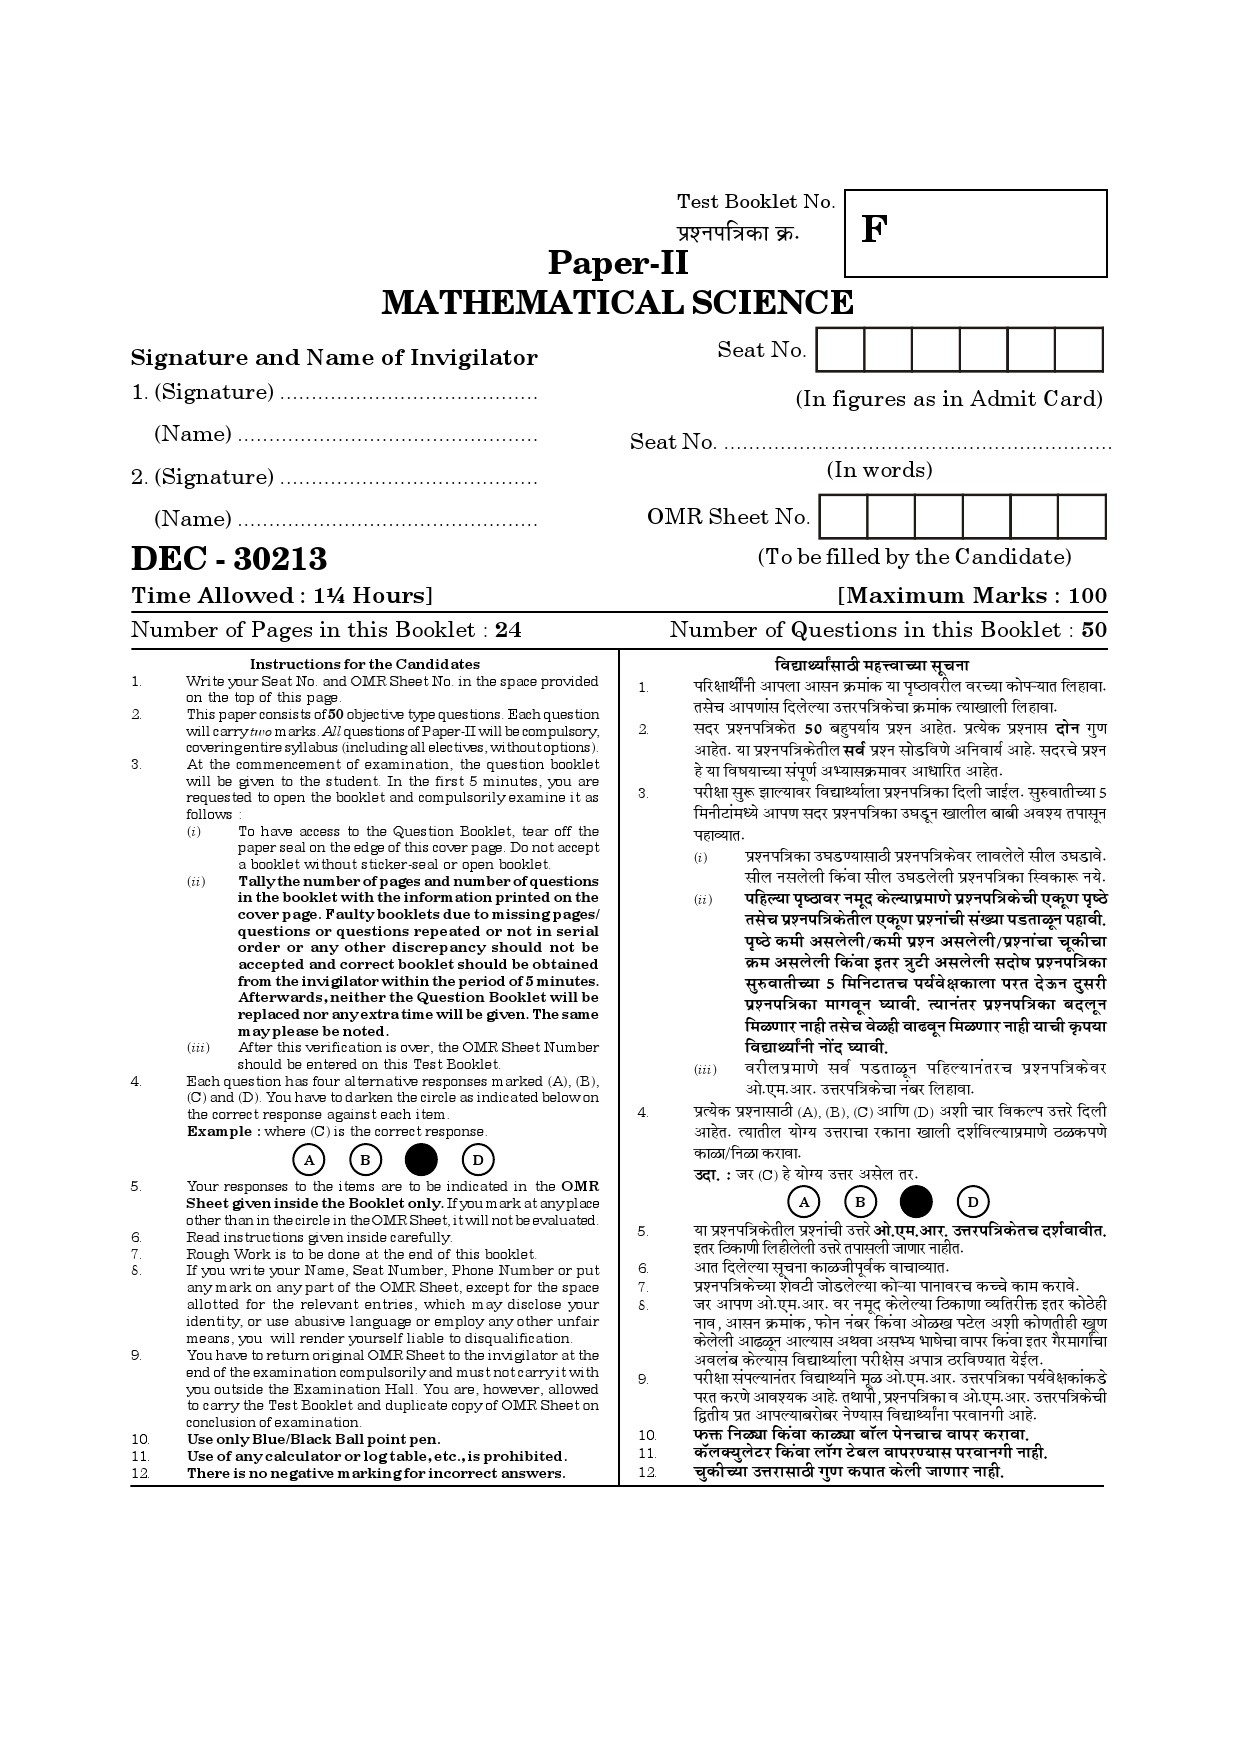 Maharashtra SET Mathematical Sciences Question Paper II December 2013 1